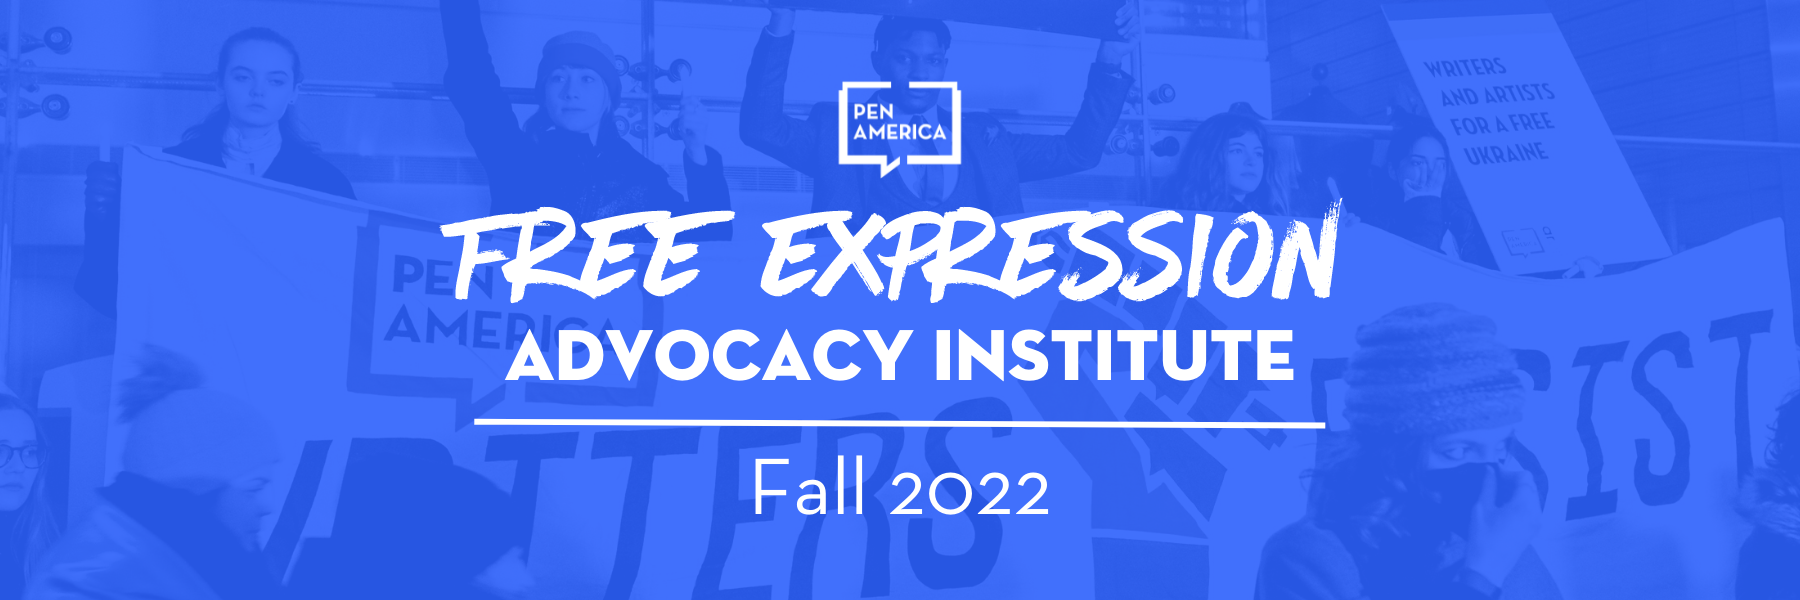 Fall 2022 Free Expression Advocacy Institute Lockup